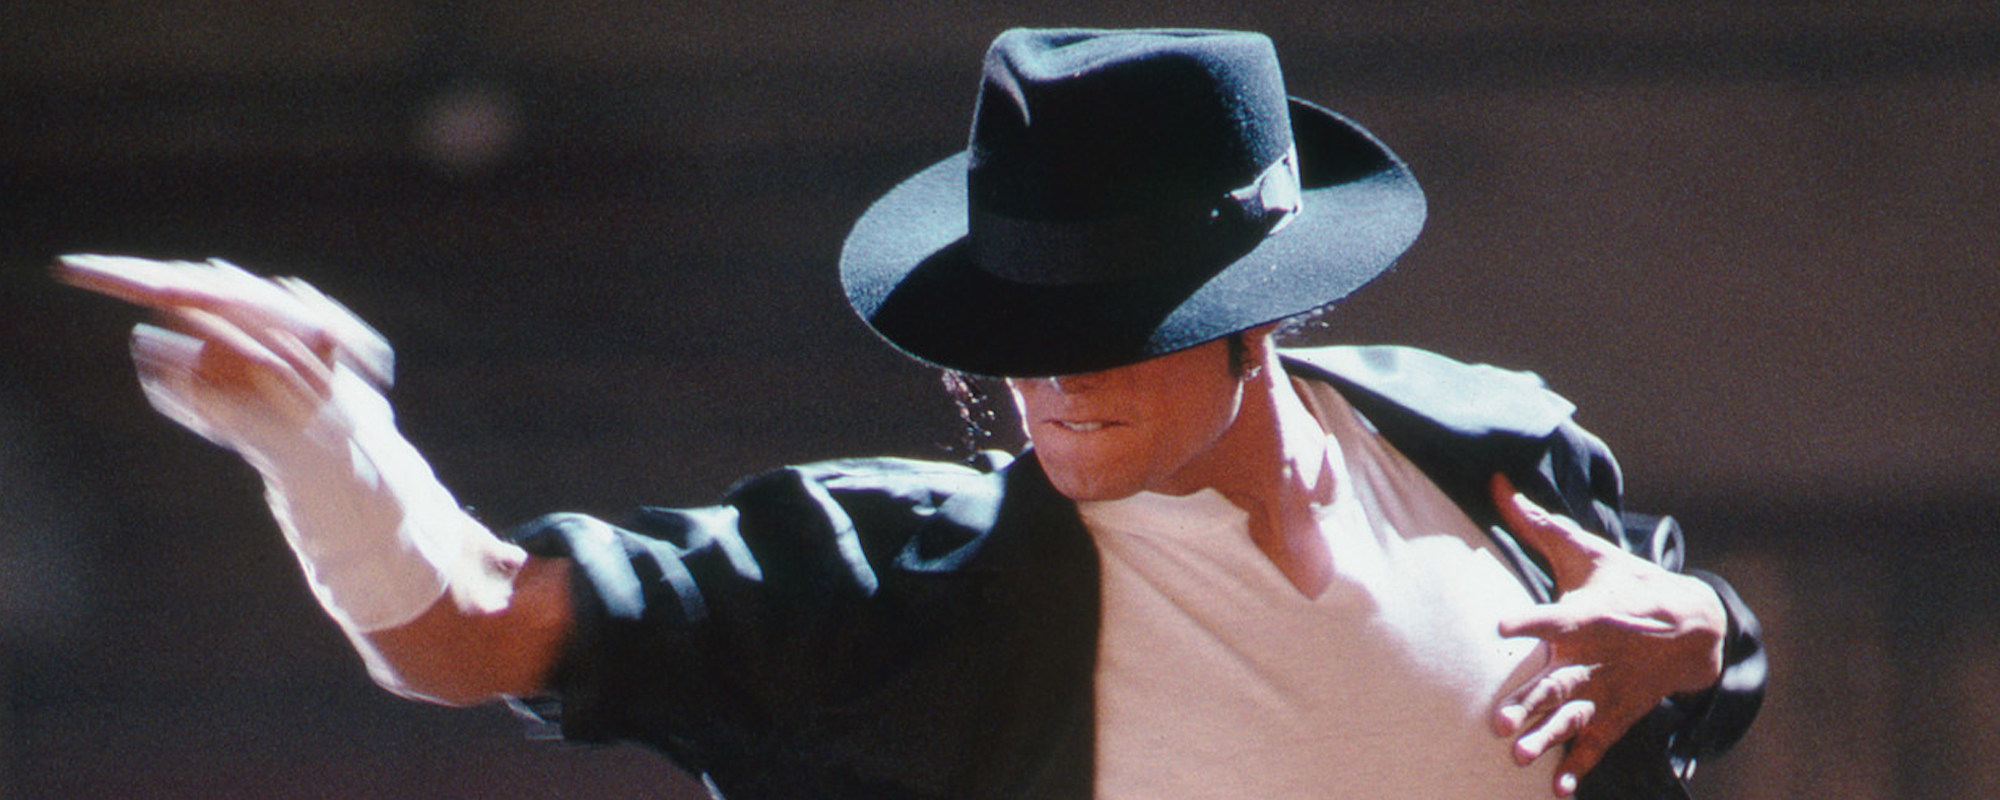 Watt interferens impuls Behind the Meaning of Michael Jackson's "Billie Jean" - American Songwriter